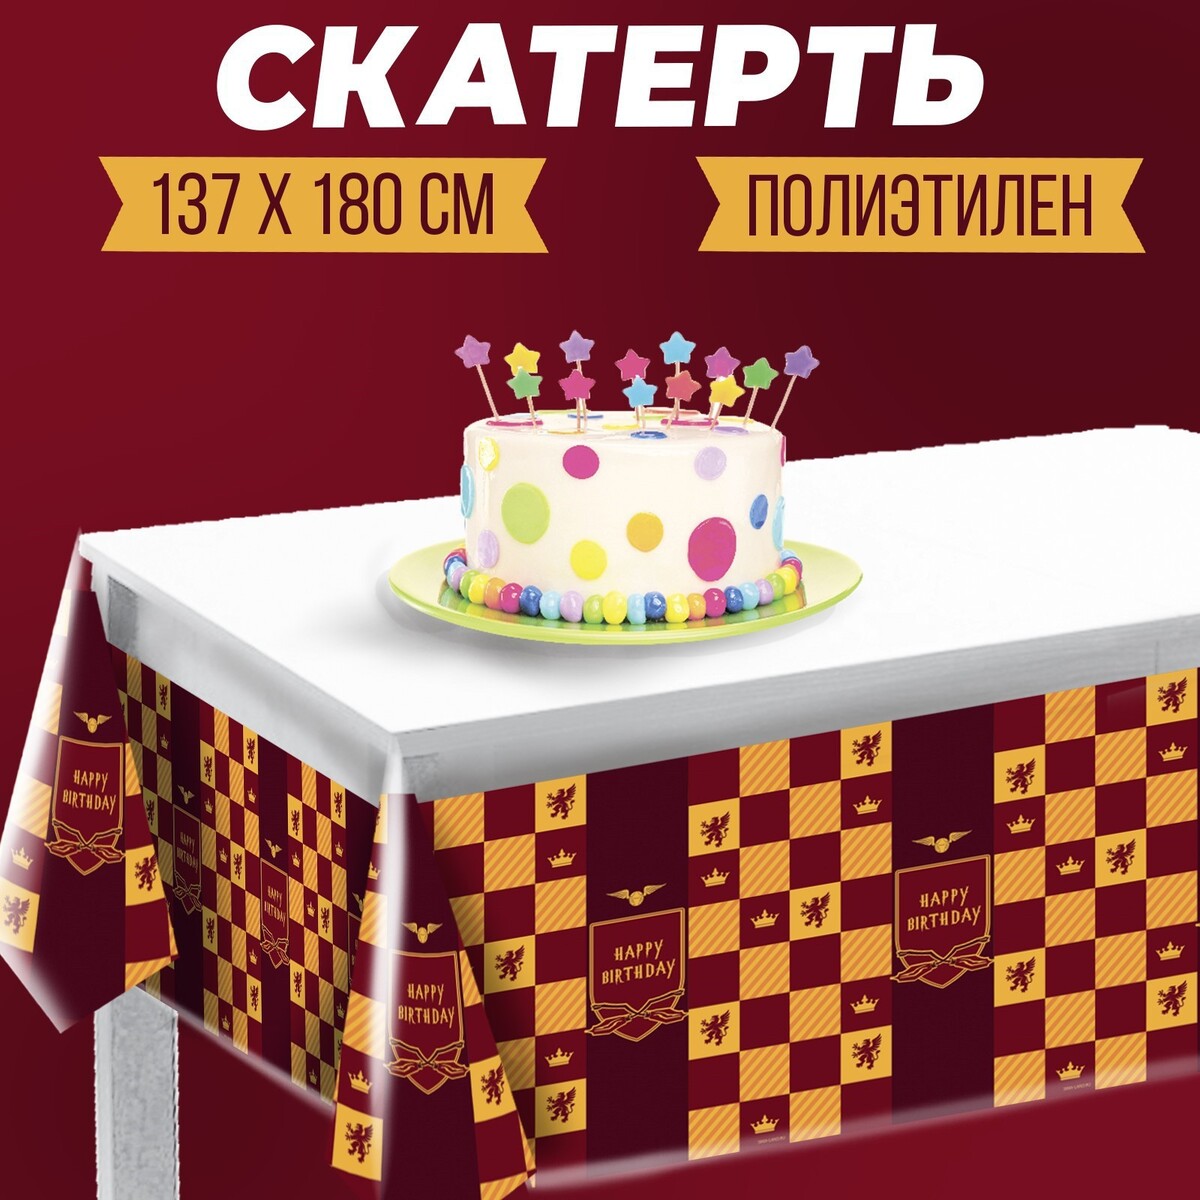 Скатерть happy birthday магия, 137×180см merimeri топпер для торта happy birthday